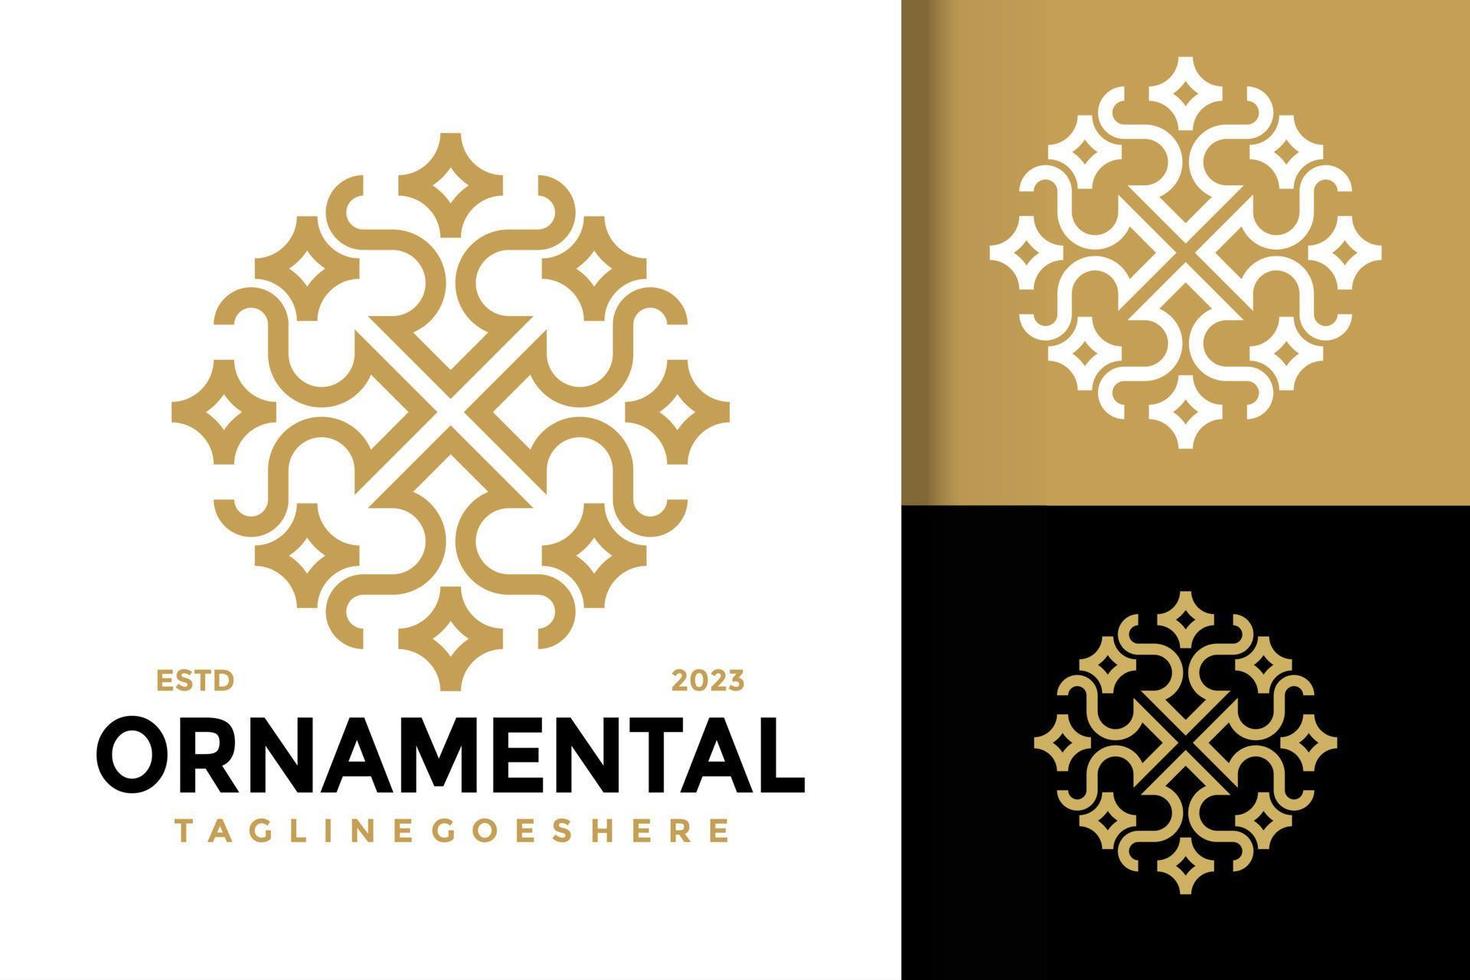 lujo estrella ornamental logo logos diseño elemento valores vector ilustración modelo